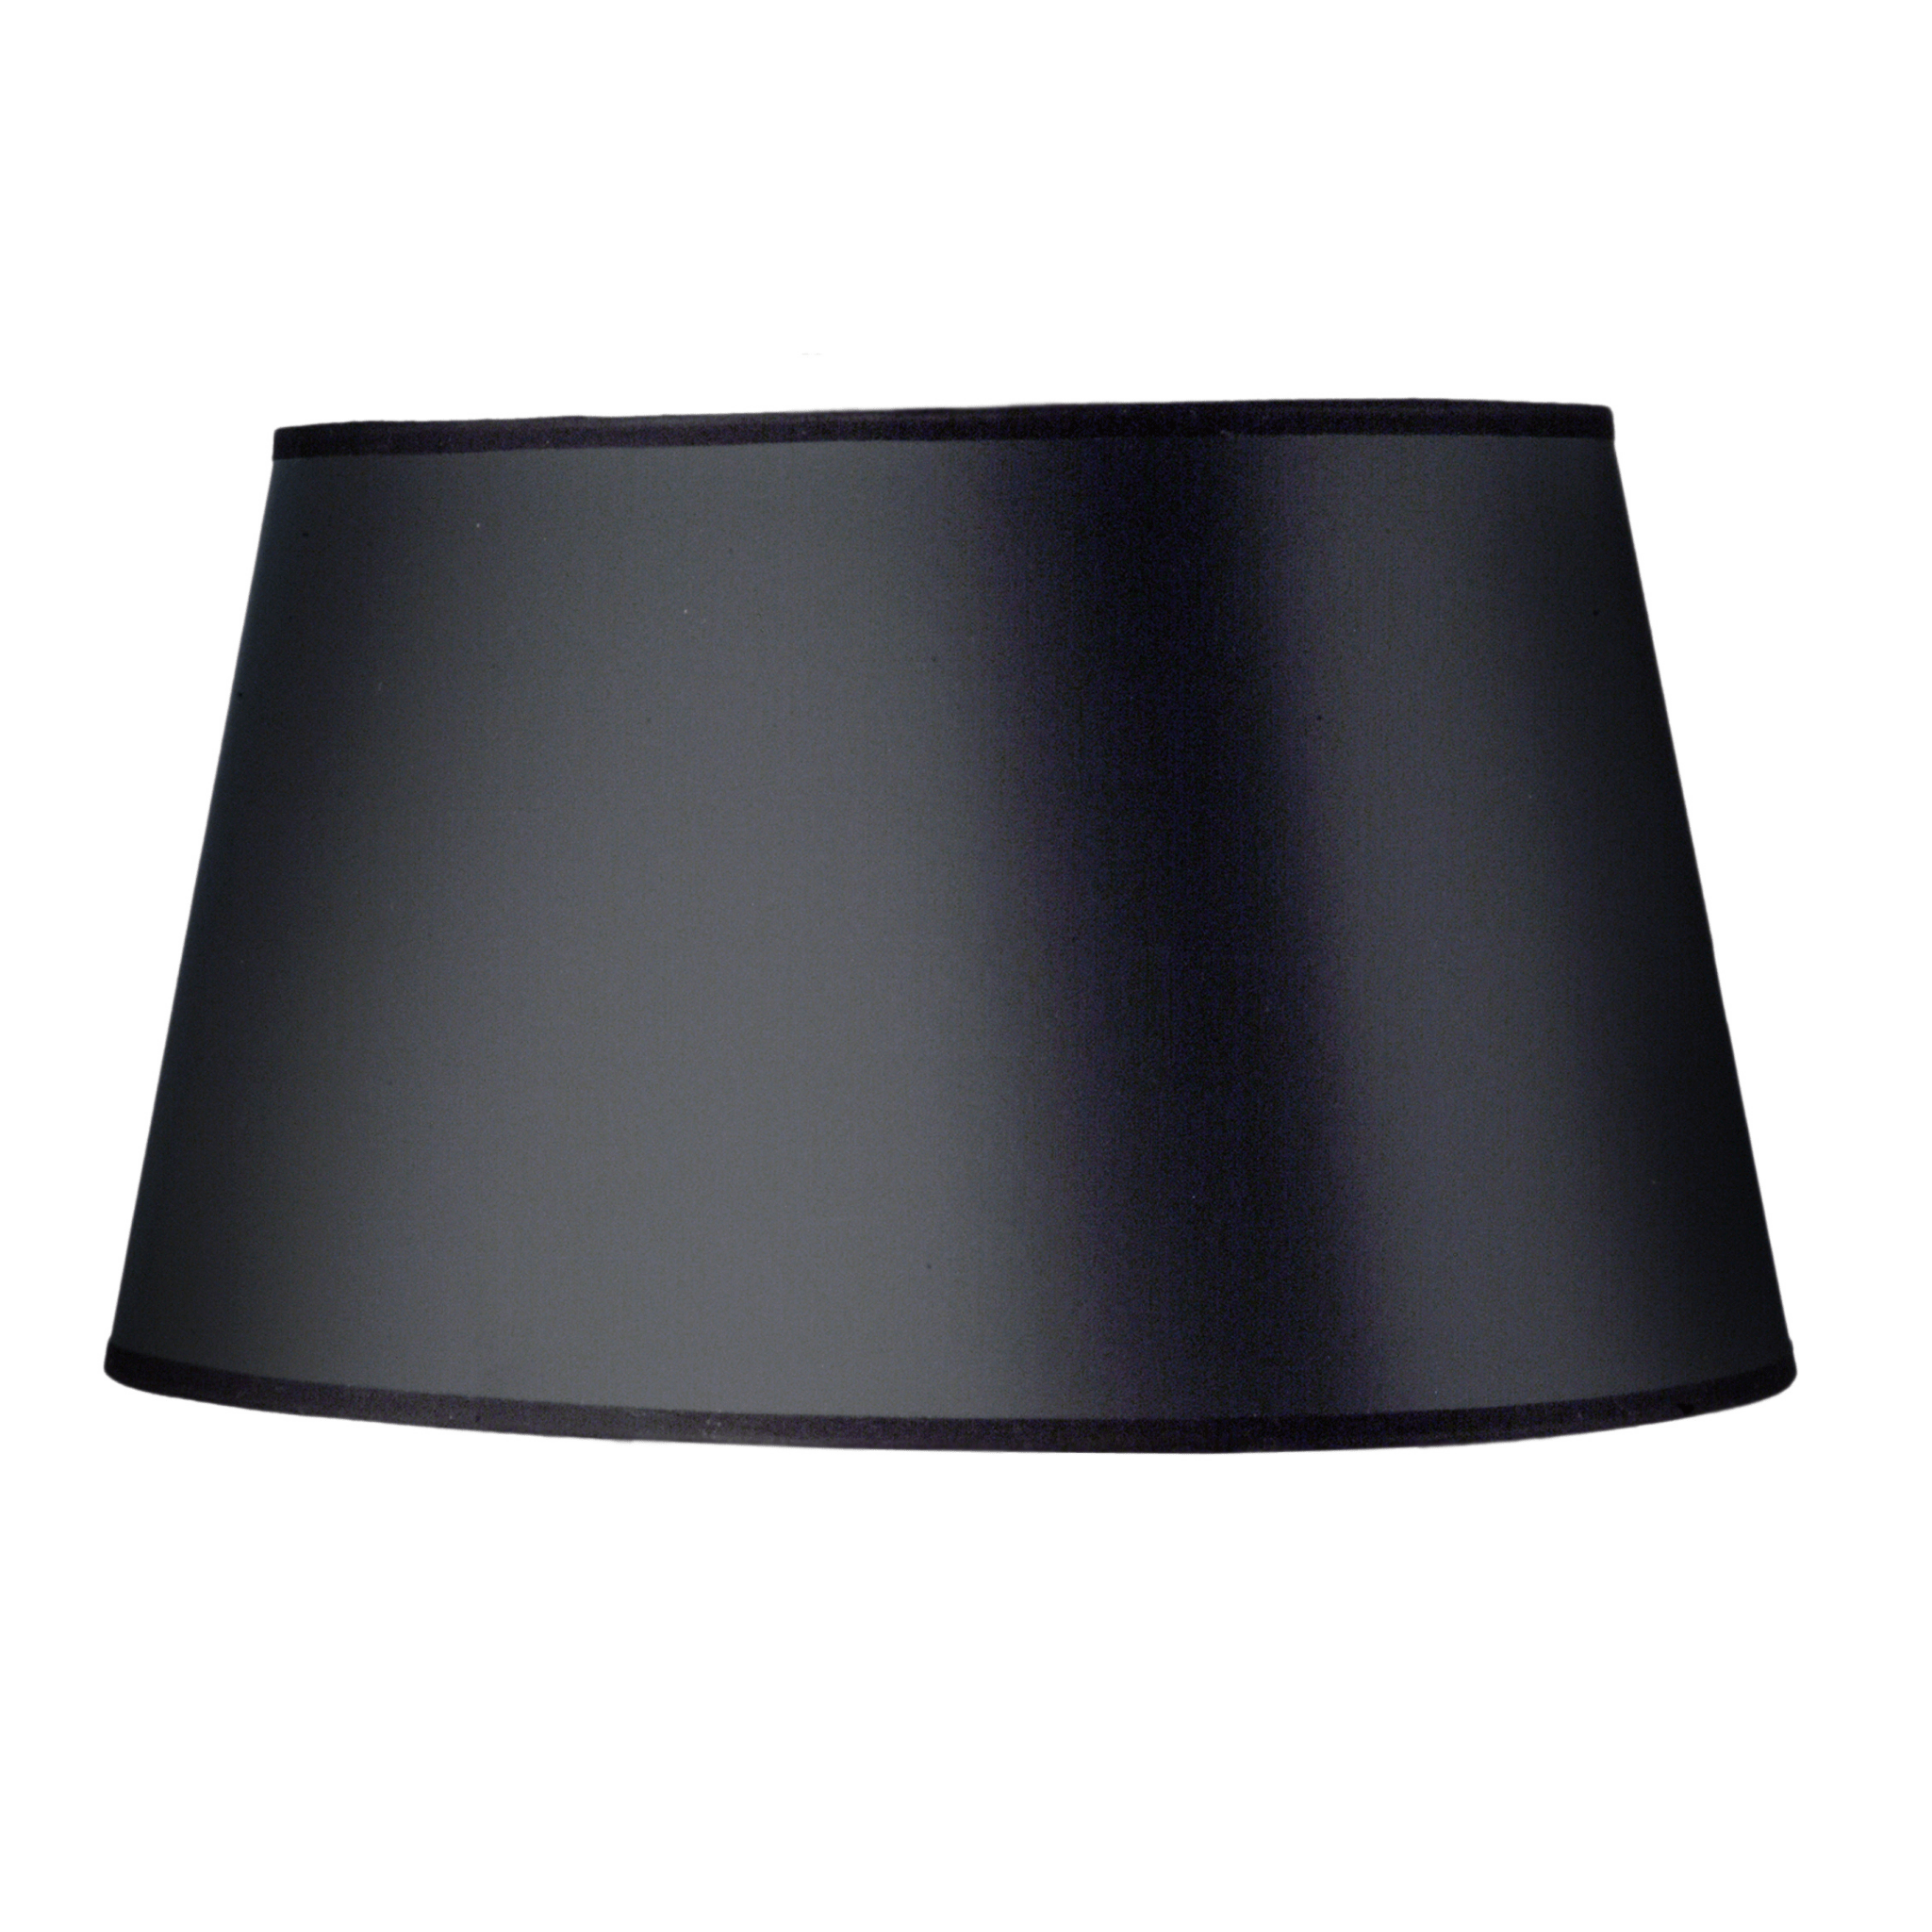 black oval lamp shade